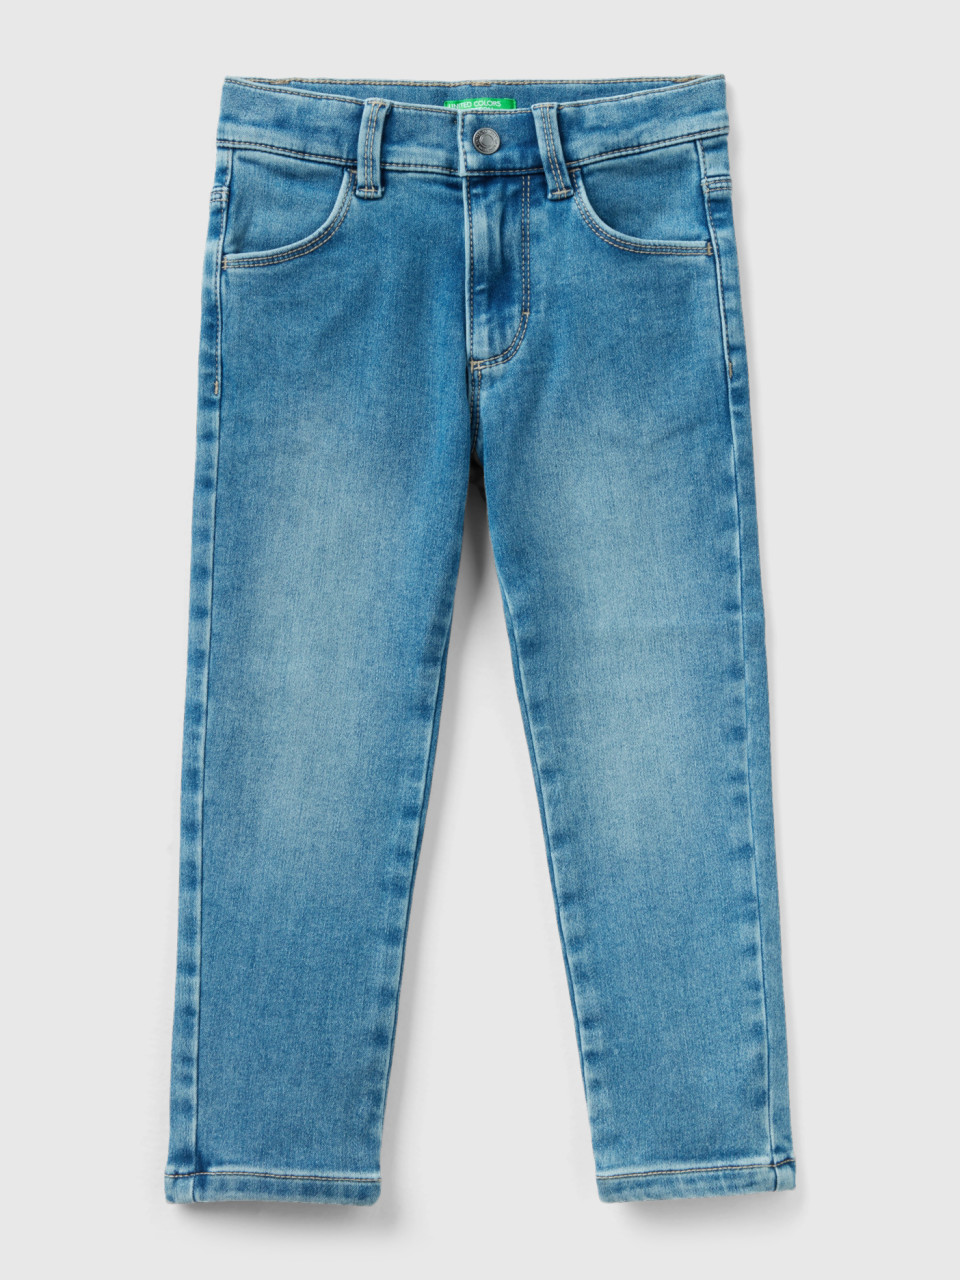 Benetton, Thermo-jeans Skinny Fit, Azurblau, female